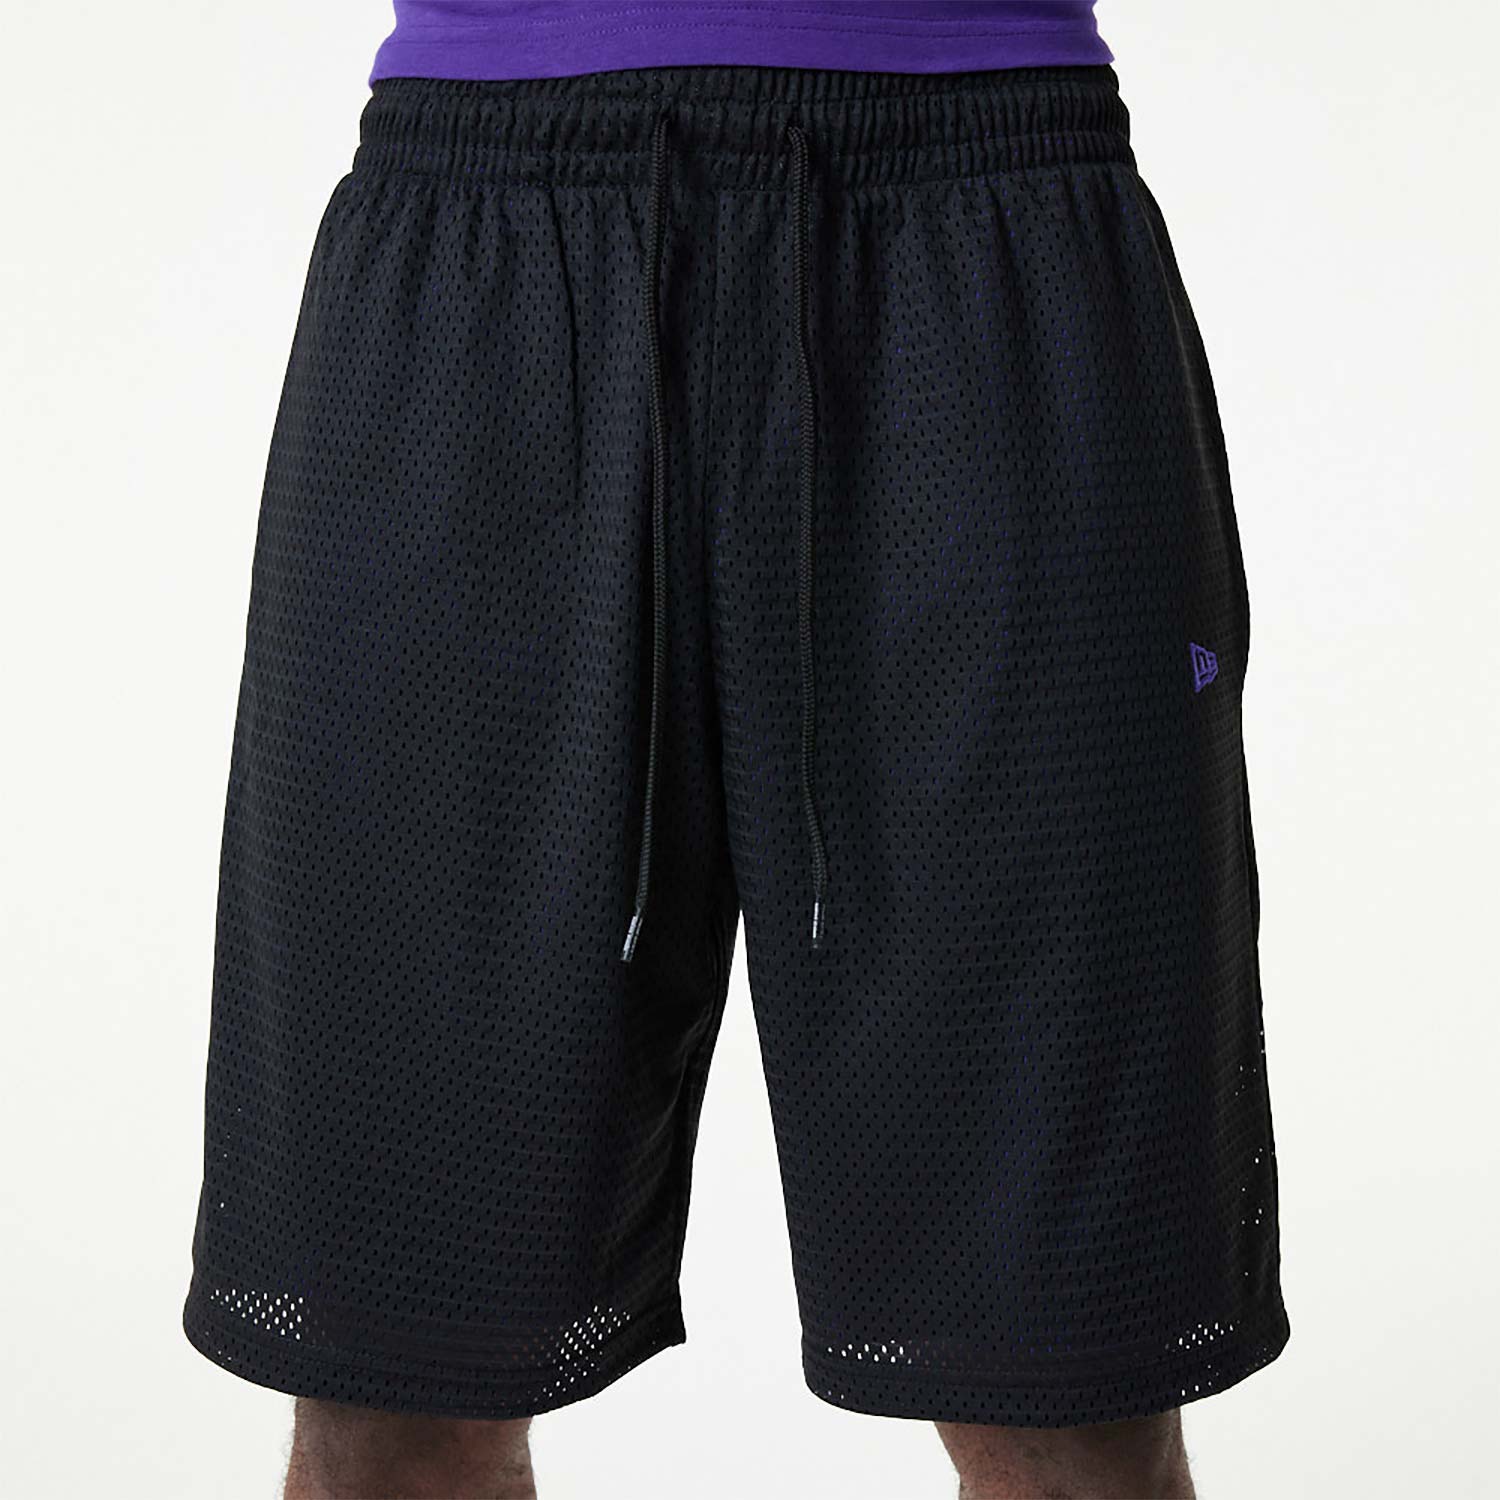 New Era Black And Purple Mesh Shorts